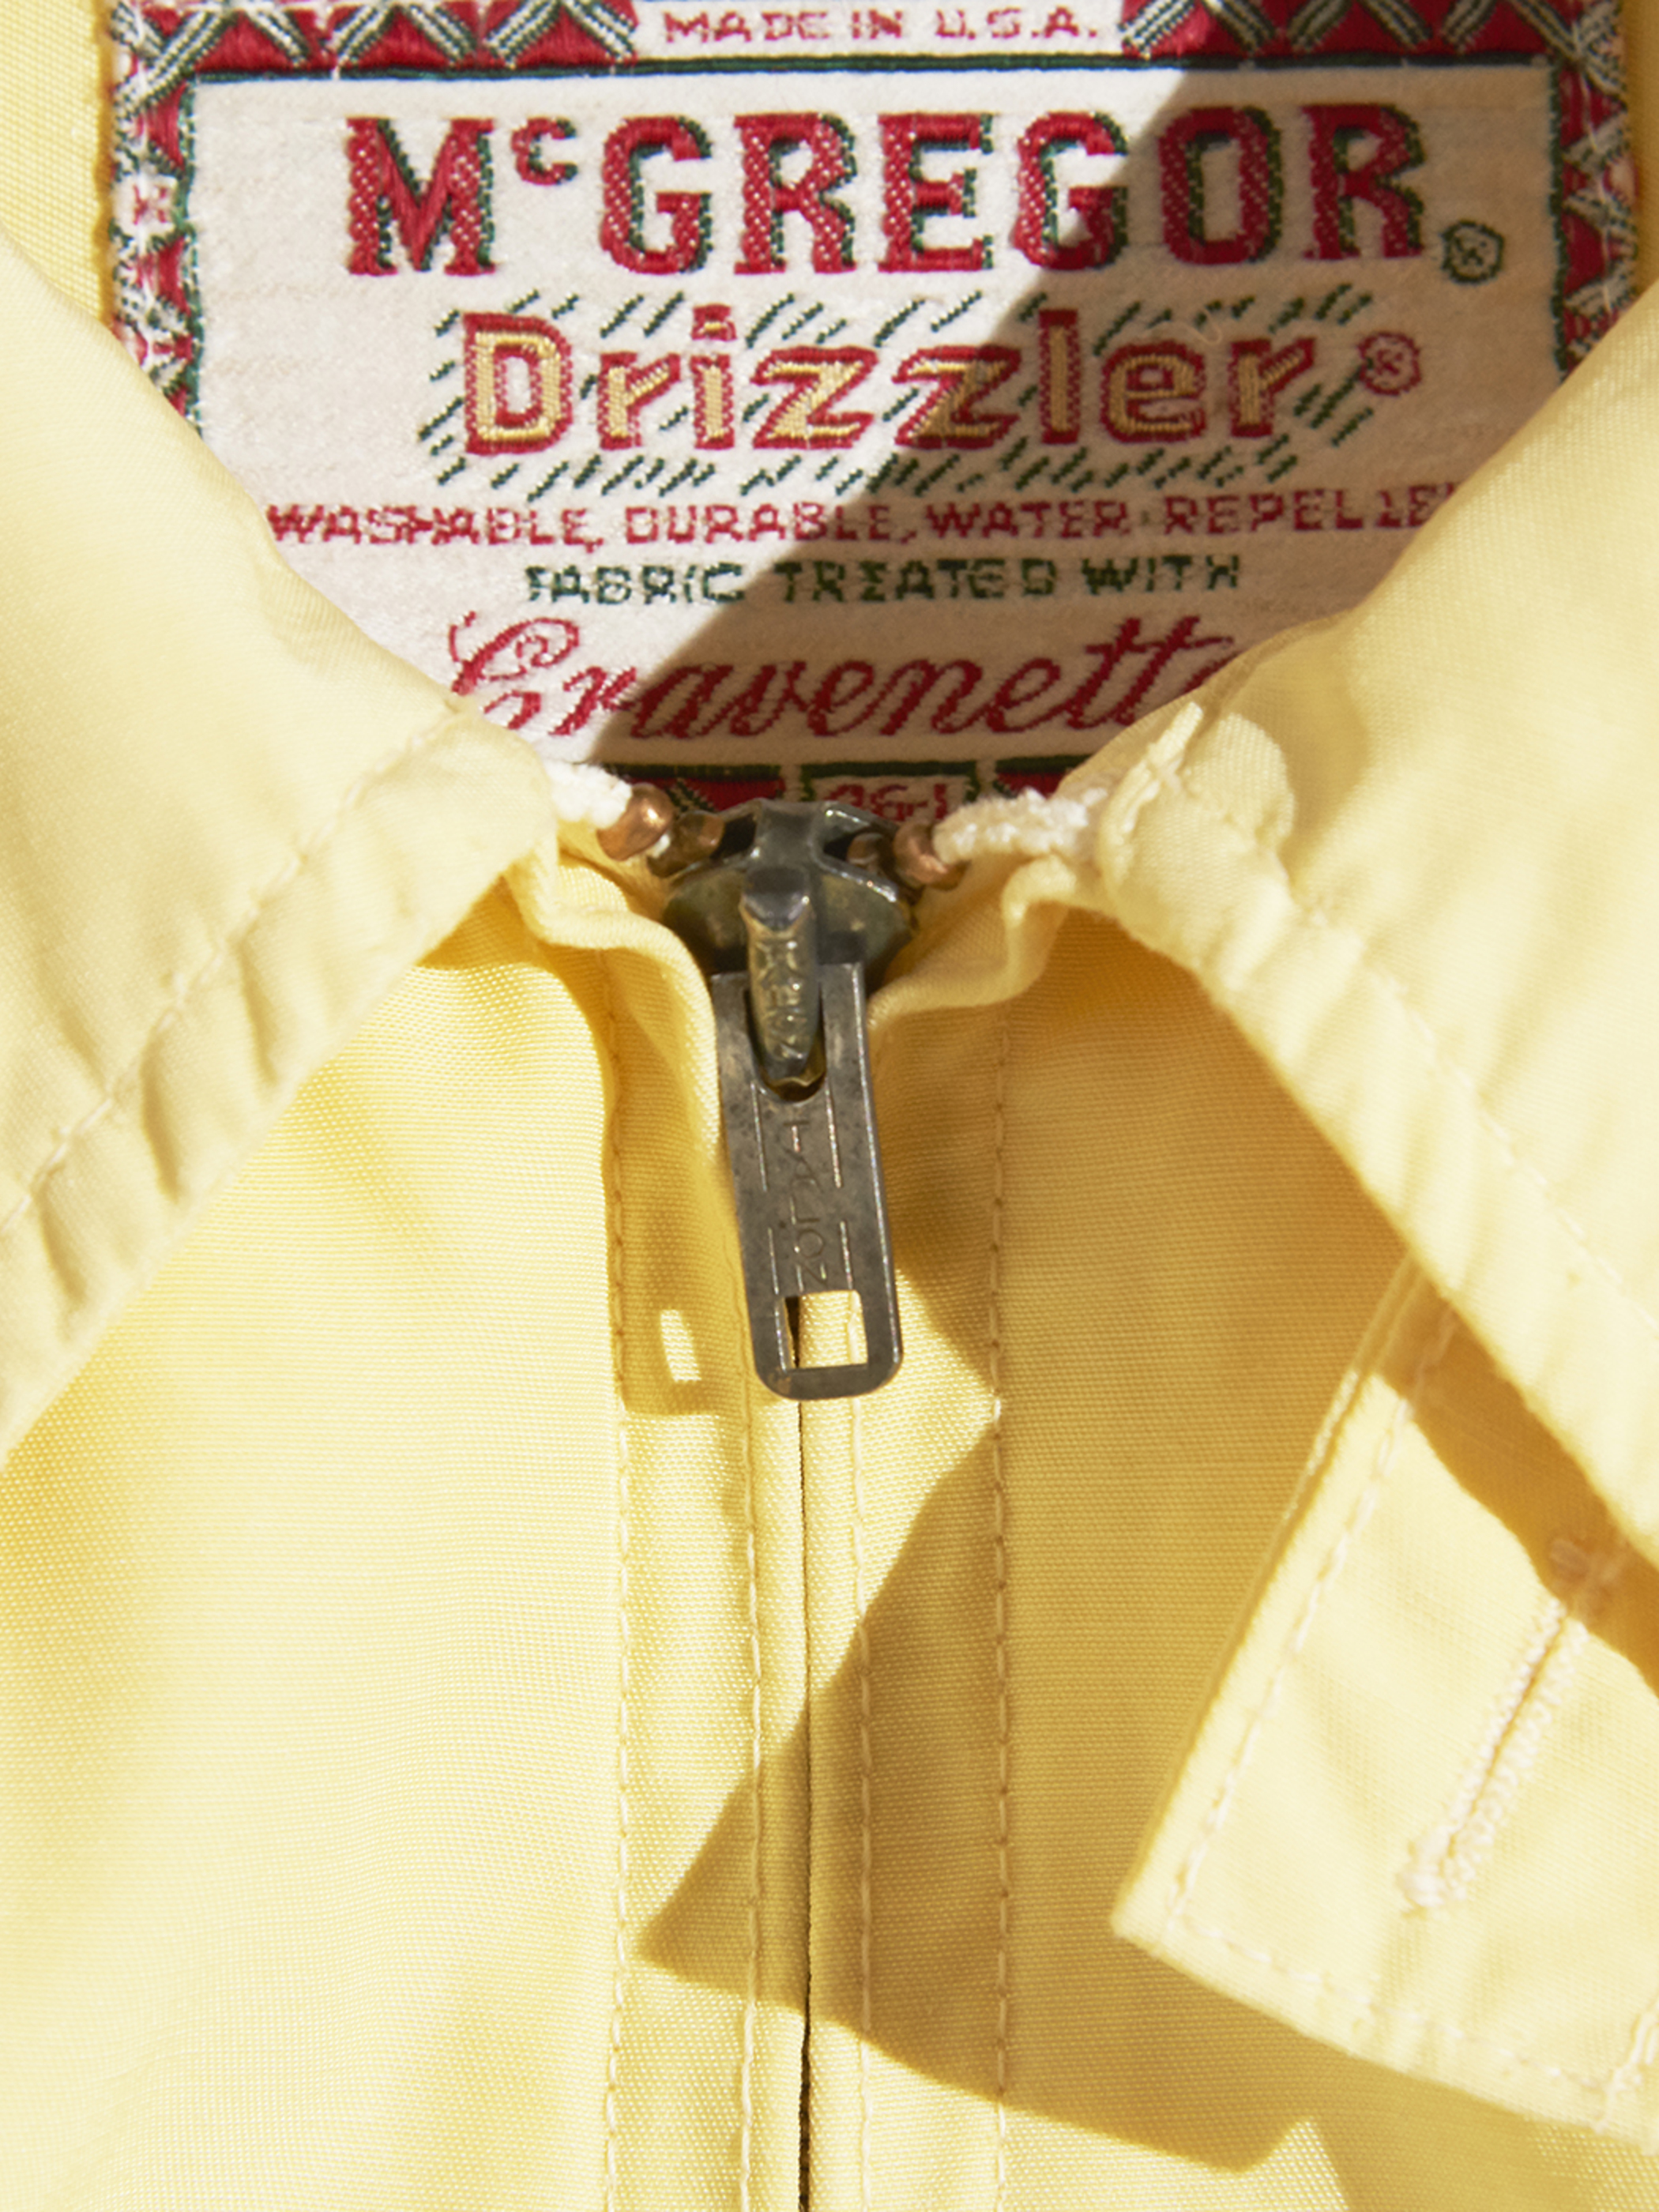 1960s "McGREGOR" drizzler jacket -LEMON YELLOW-